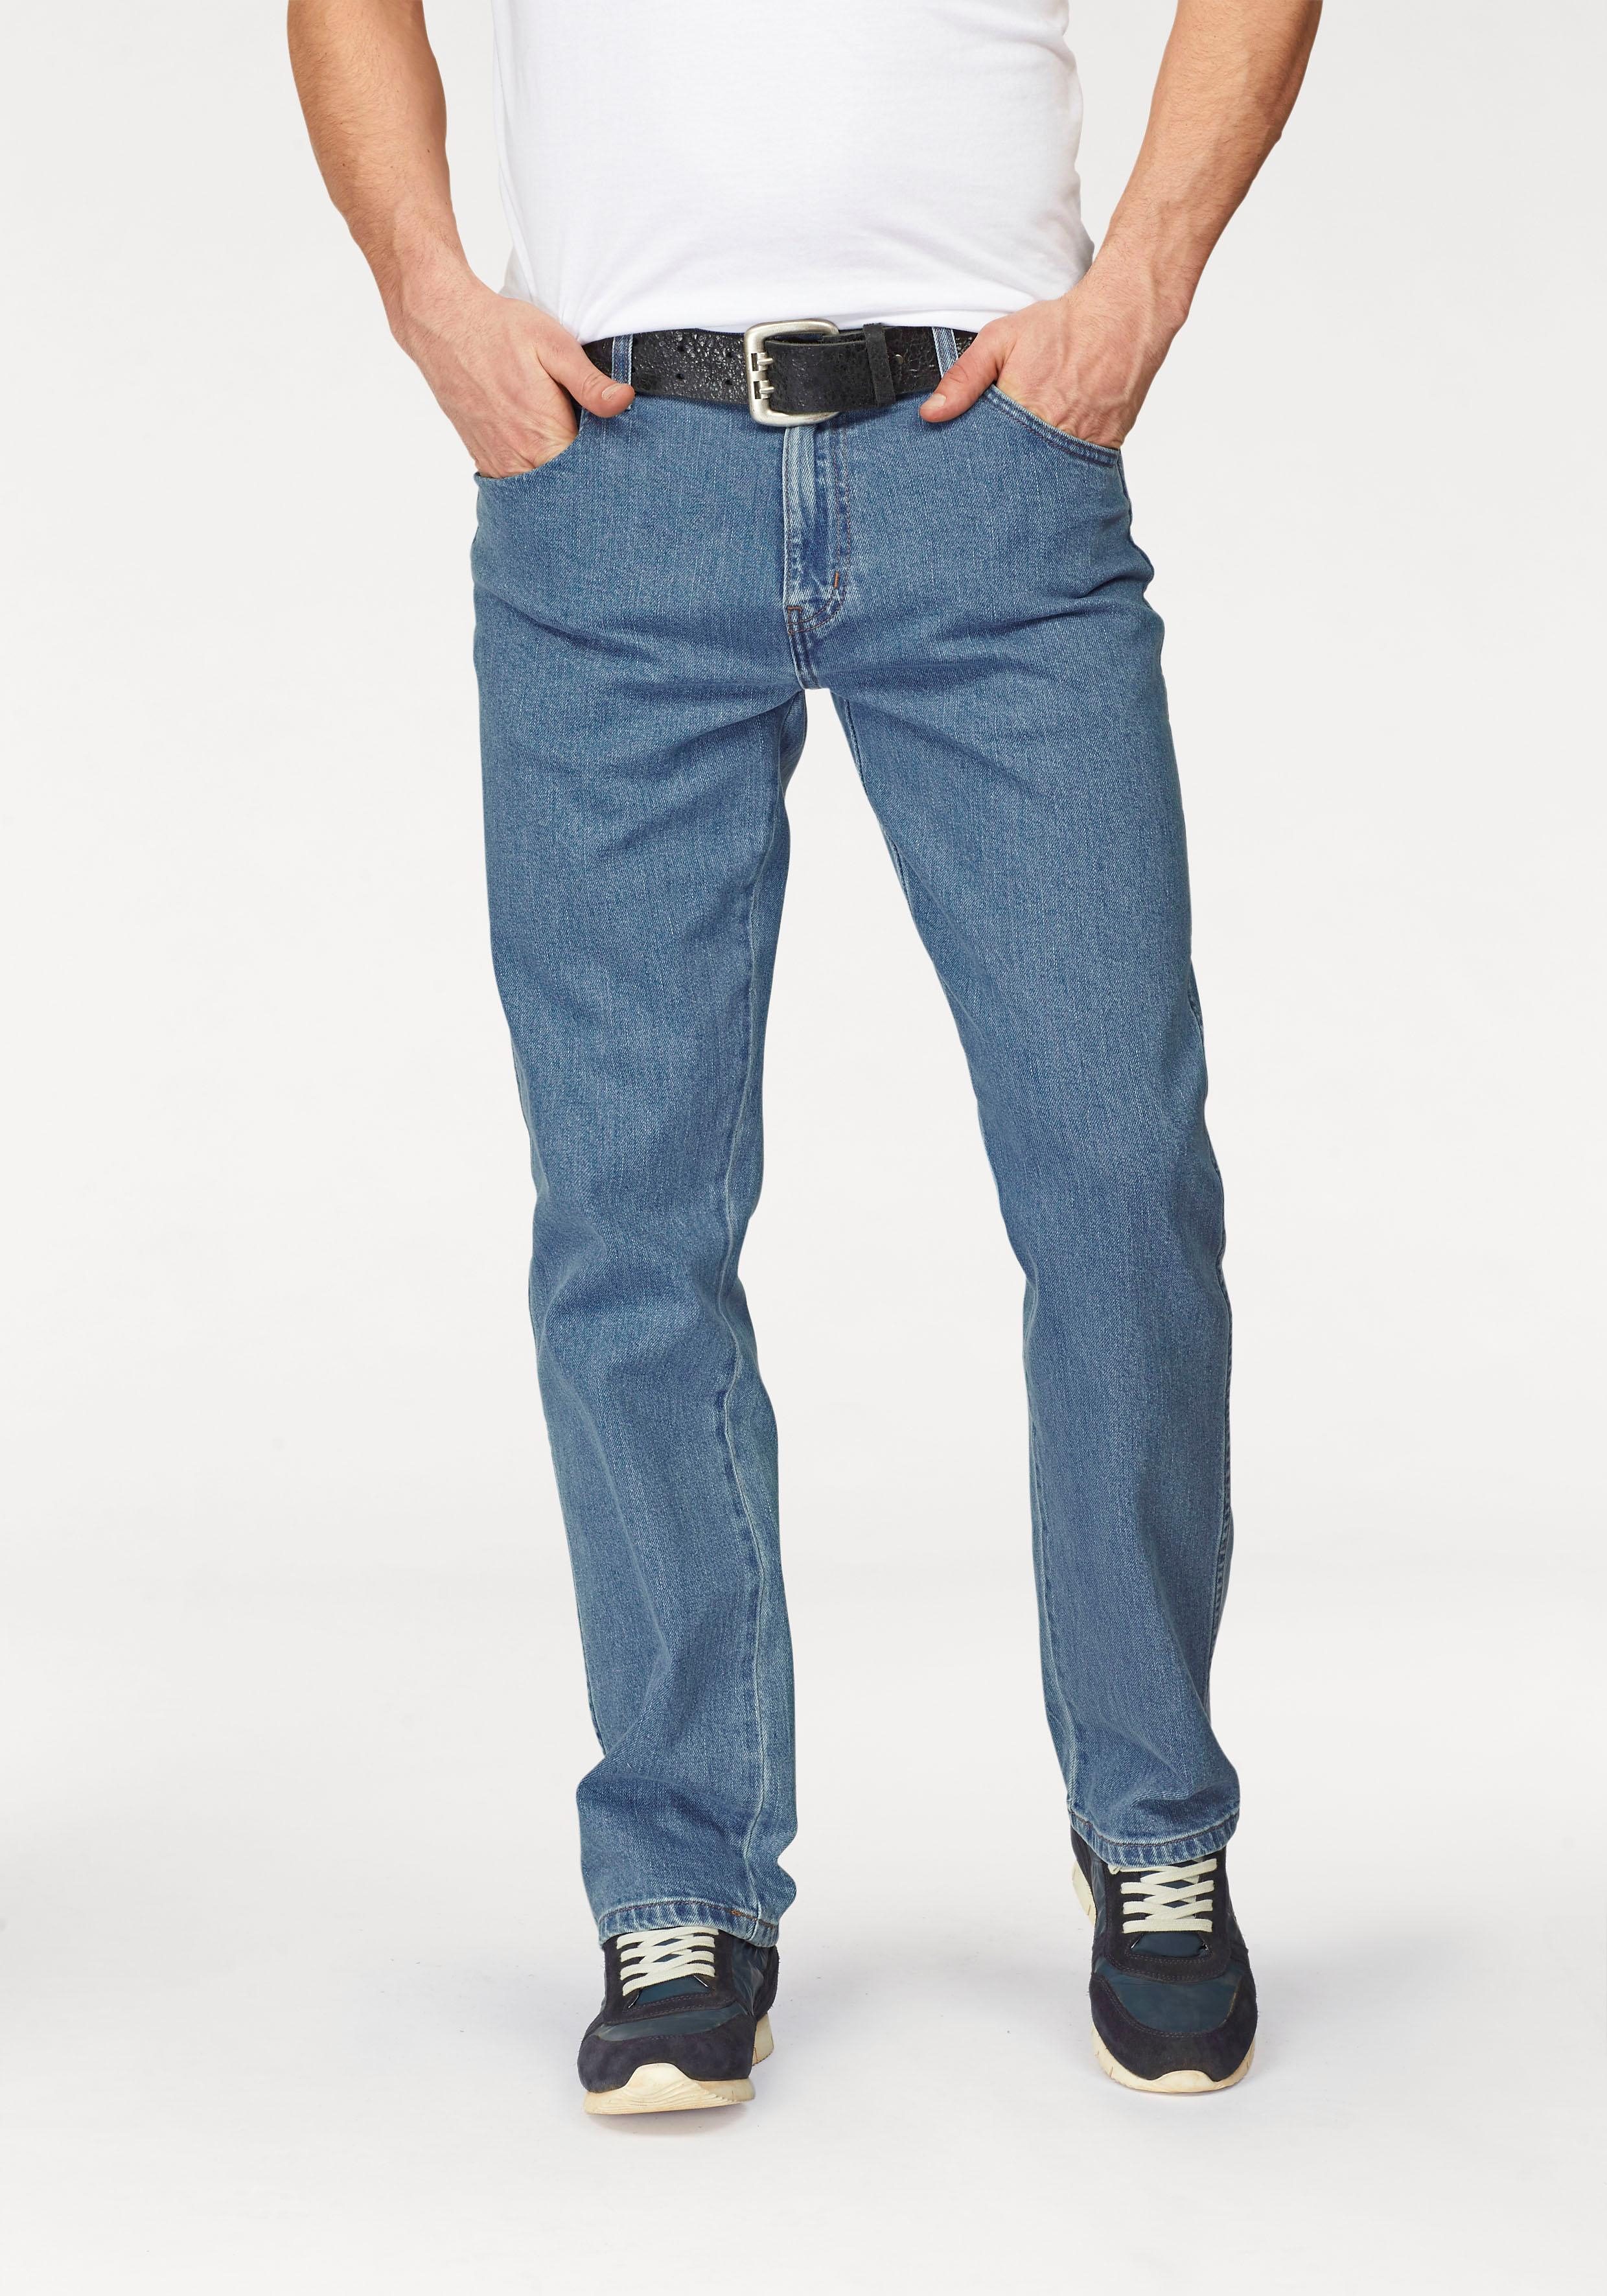 Wrangler NU 15% KORTING: Regular jeans, WRANGLER, stretch